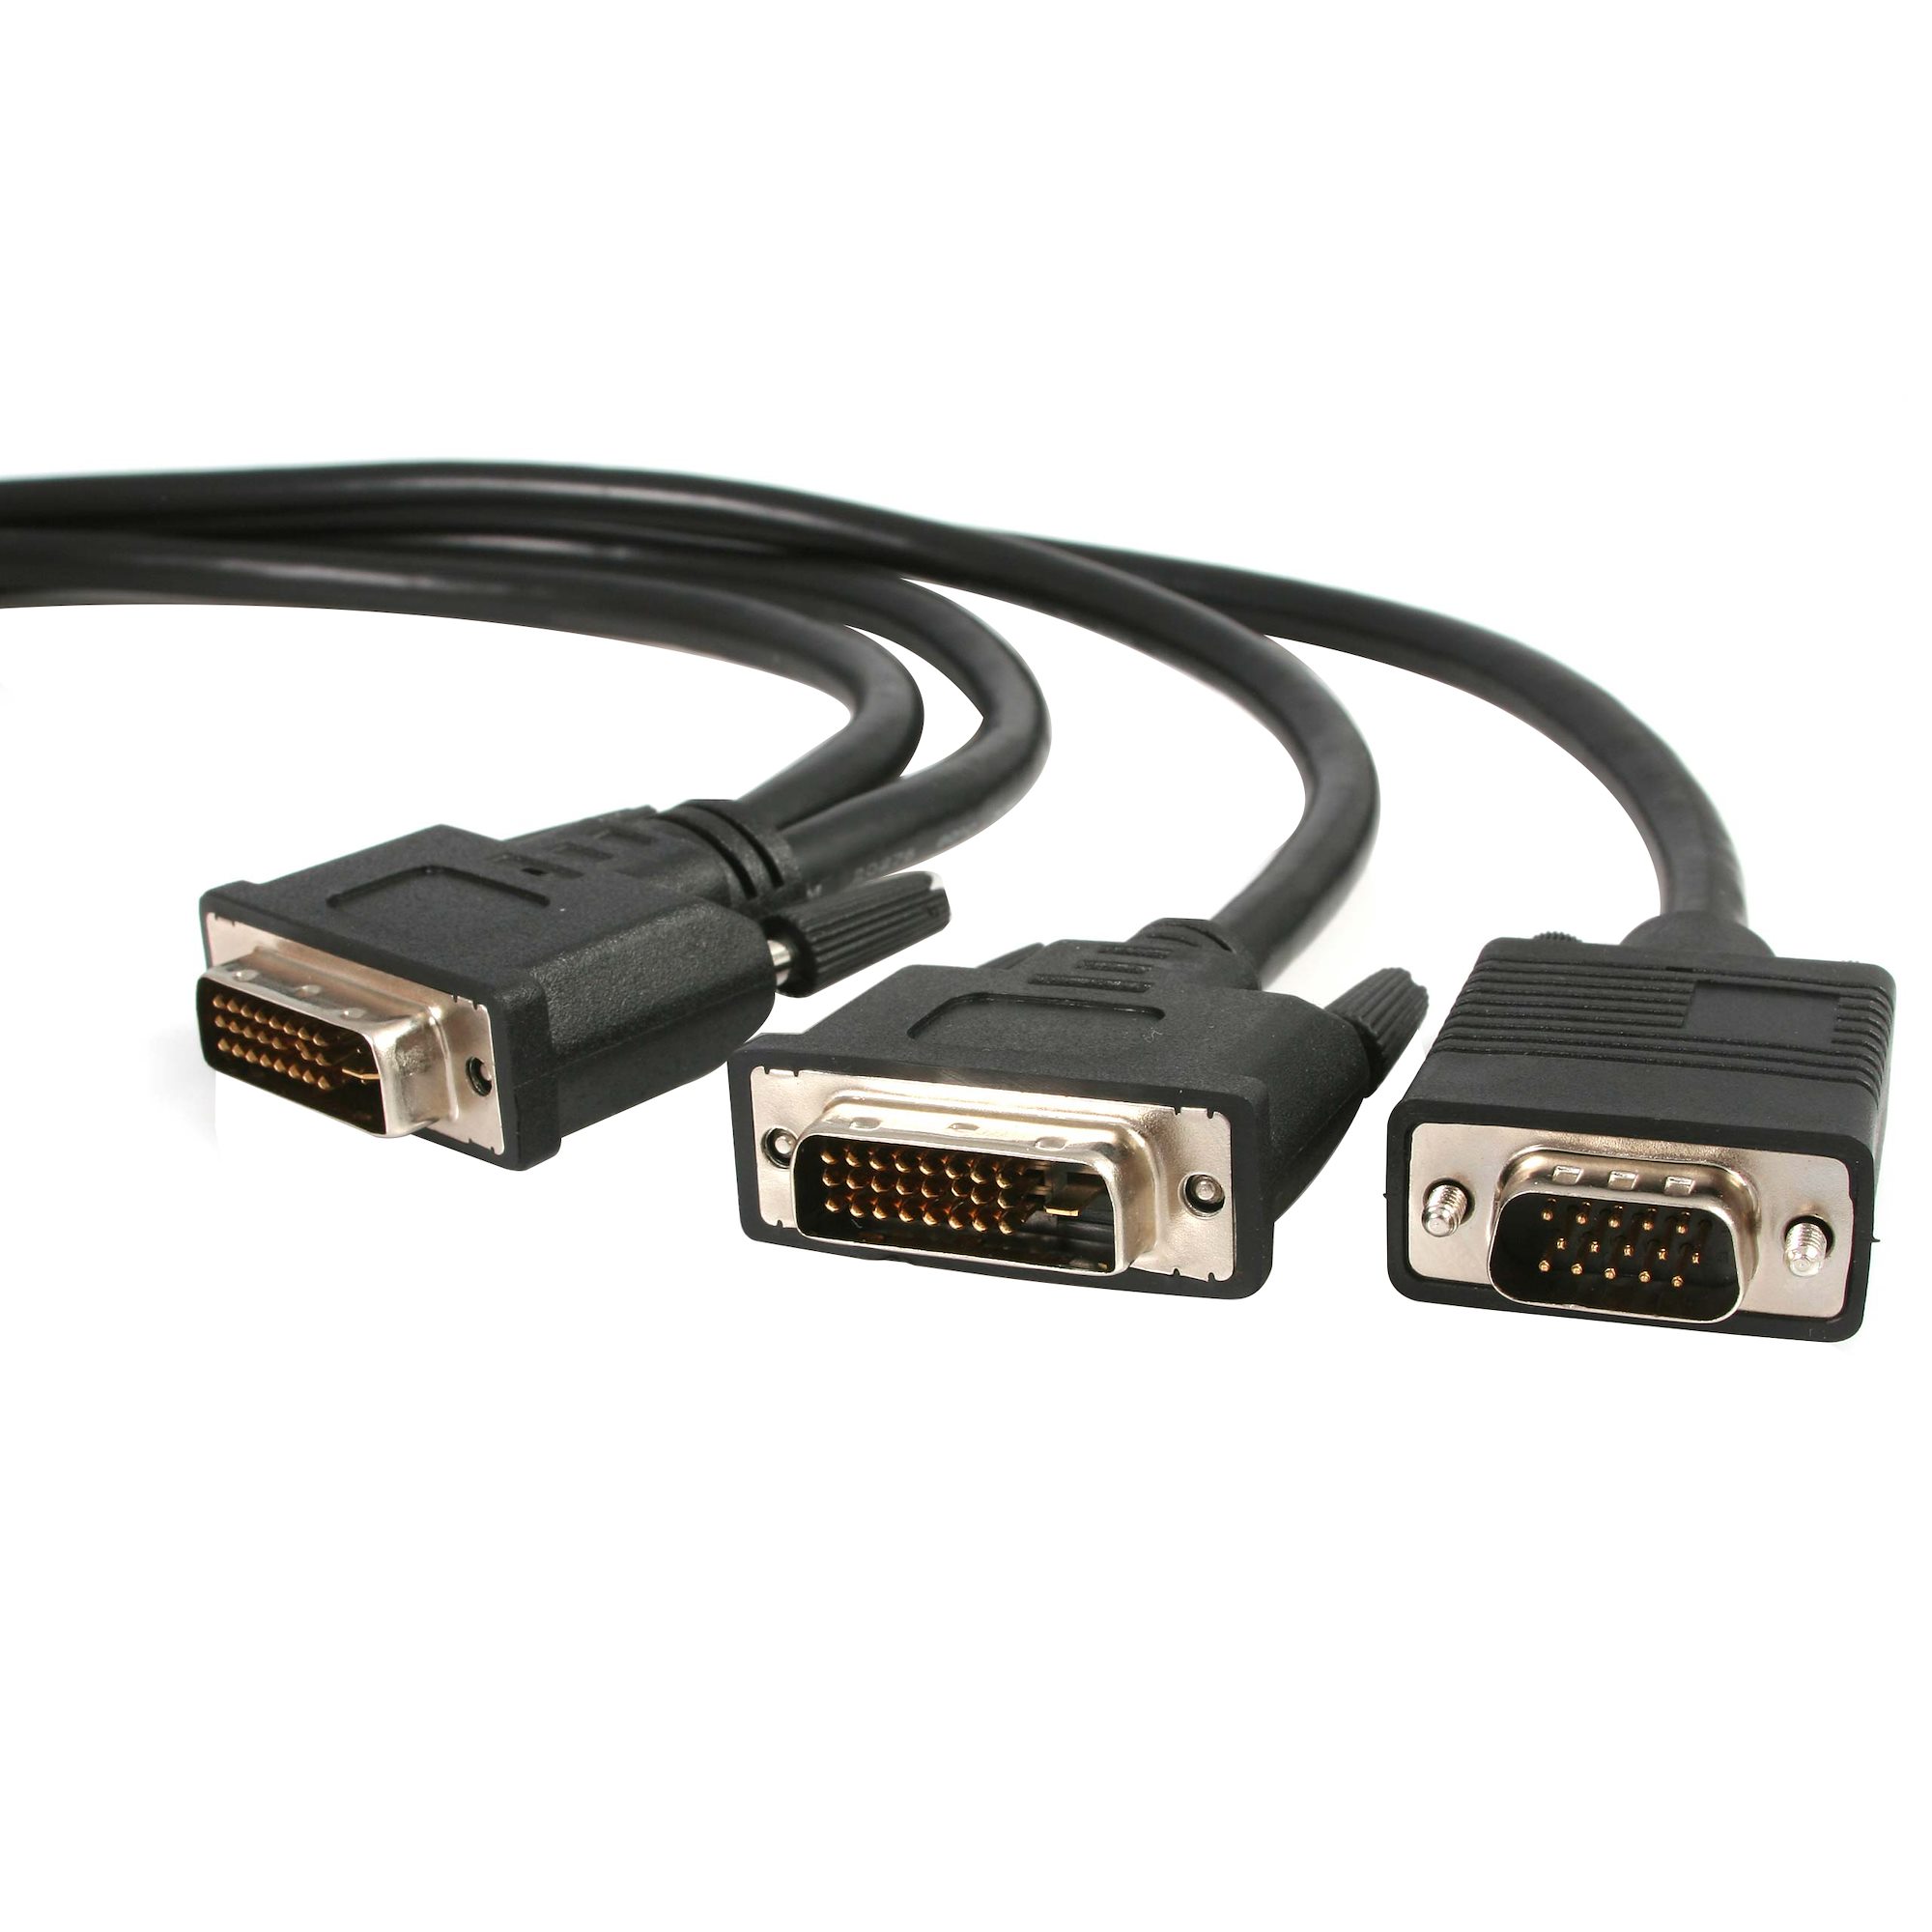 StarTech.com Câble adaptateur DVI vers VGA – M/F - adaptateur VGA - DVIVGAMF